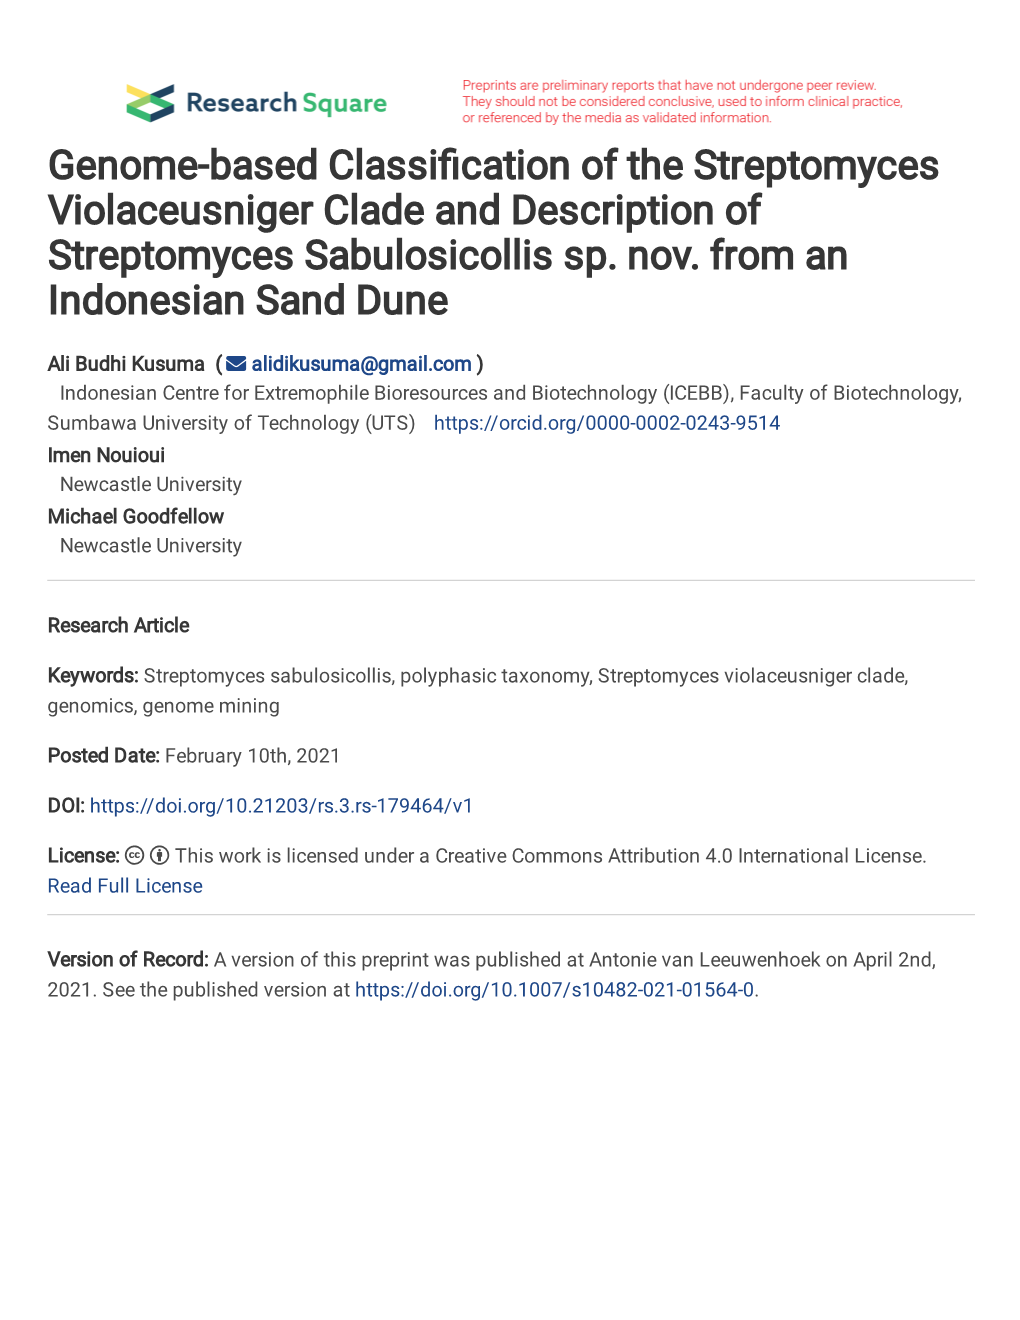 Genome-Based Classification of the Streptomyces Violaceusniger Clade and Description of Streptomyces Sabulosicollis Sp. Nov